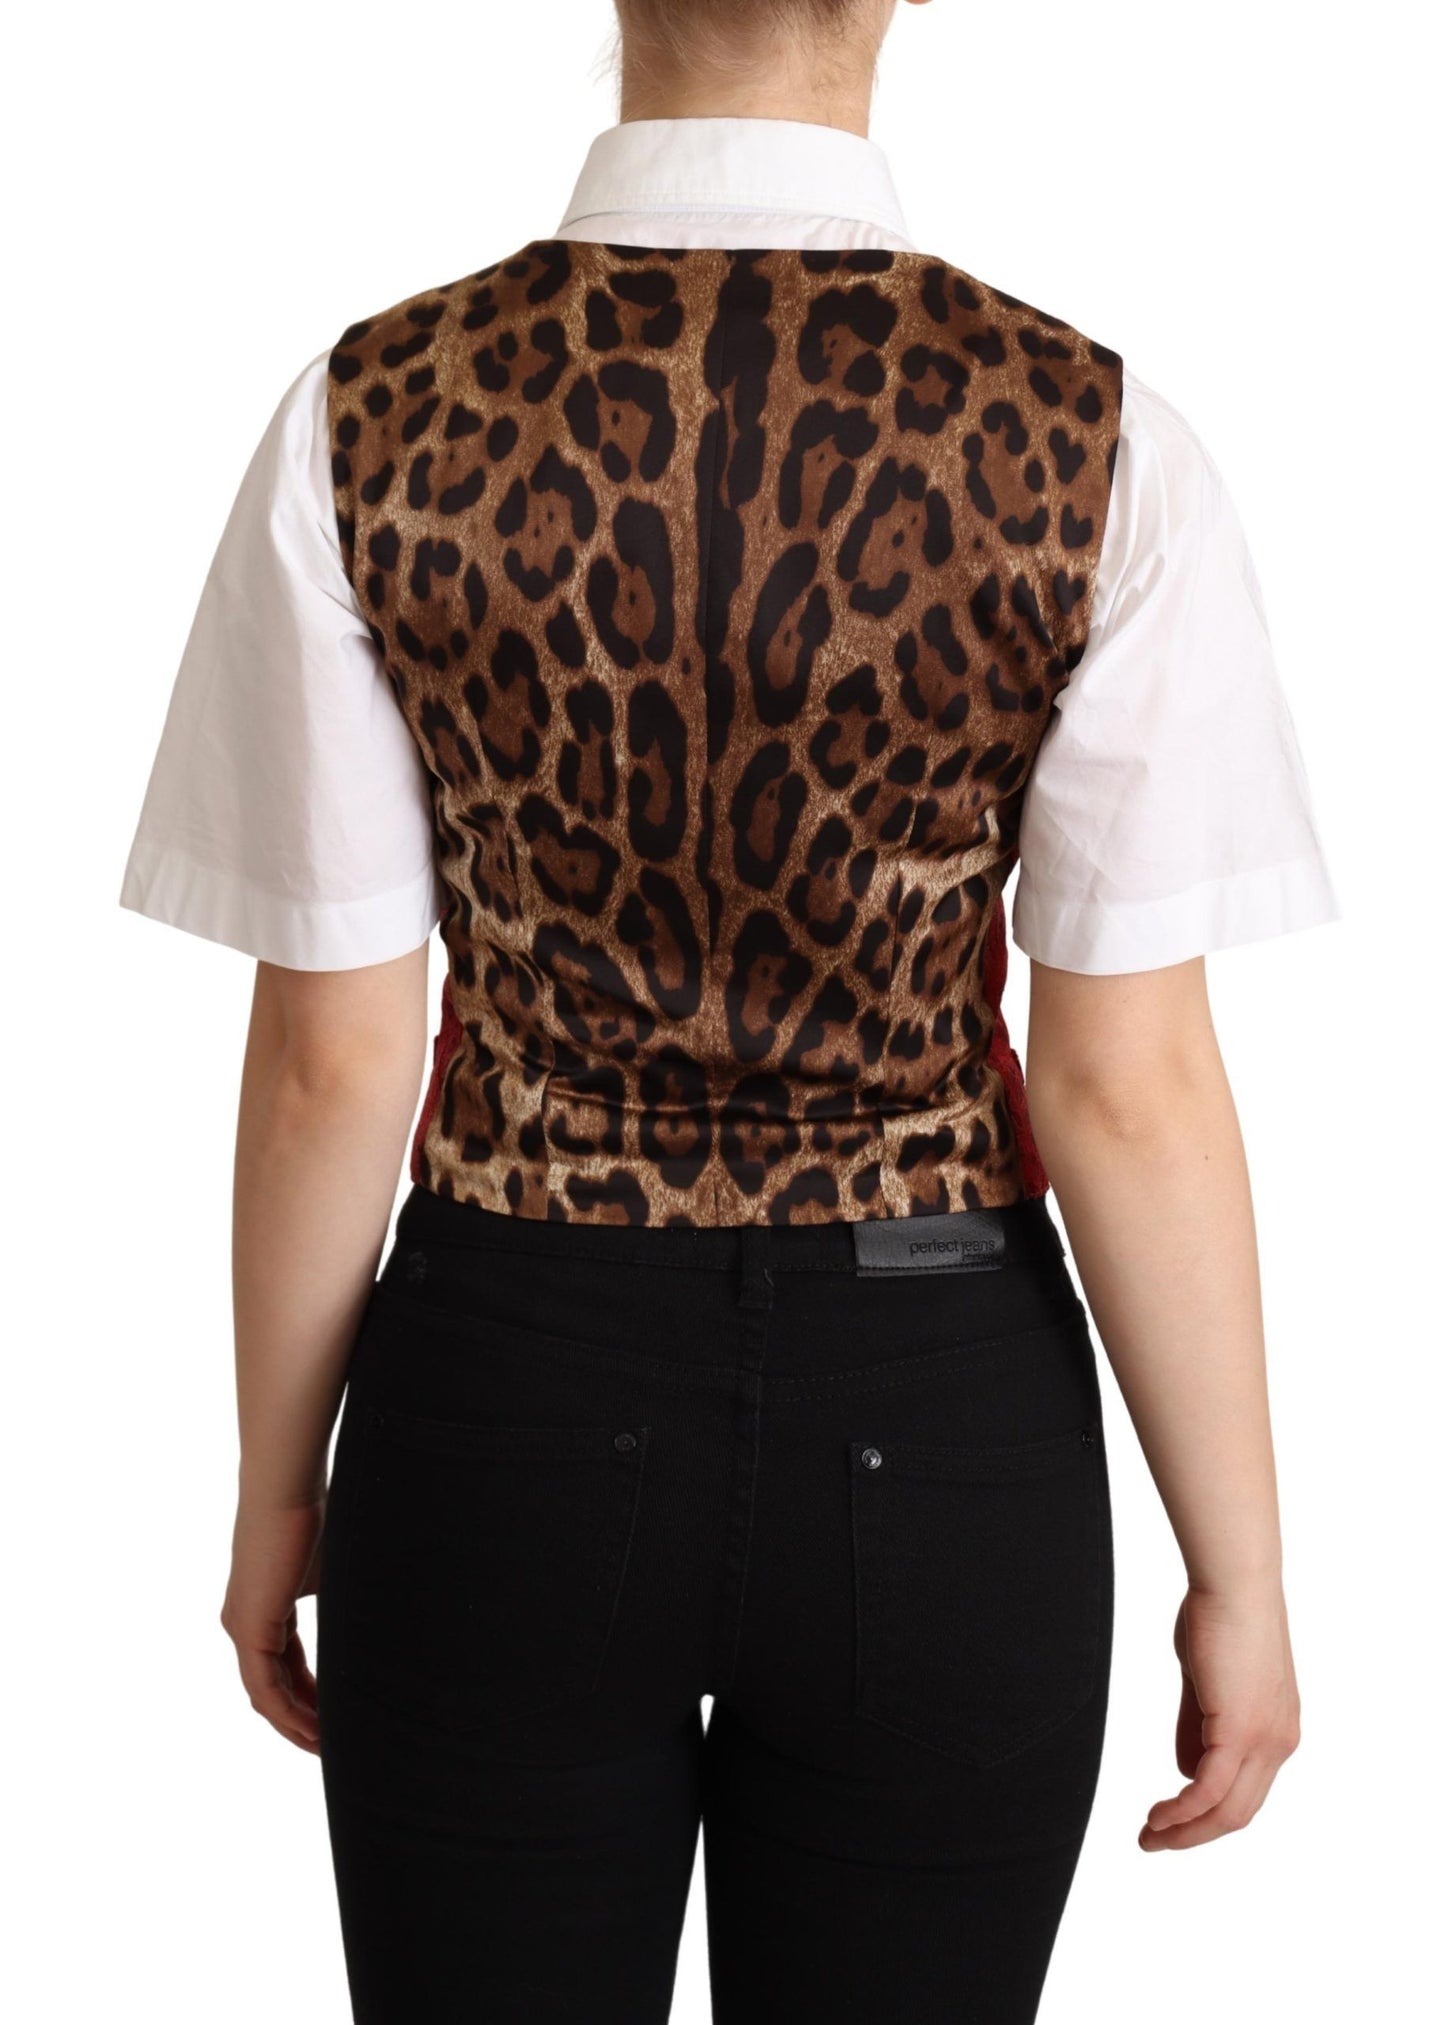 Dolce &amp; Gabbana Red Brocade Leopard Print Waistcoat Vest